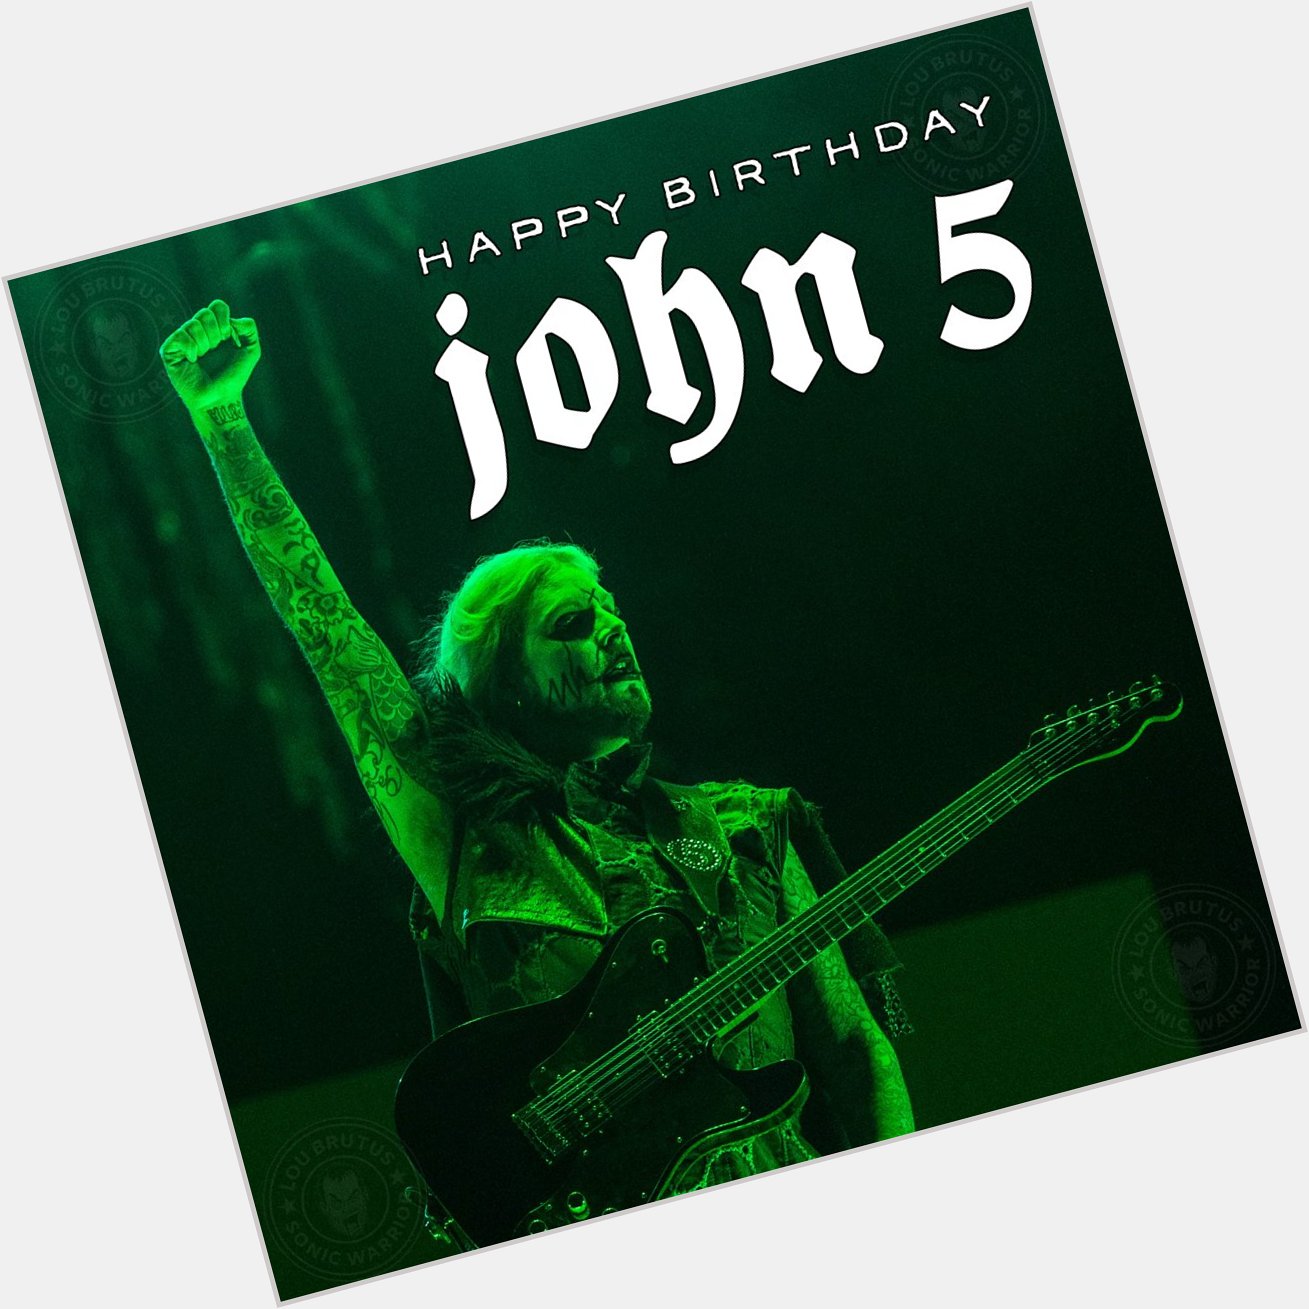 HBD J5! Happy Birthday to John 5!  